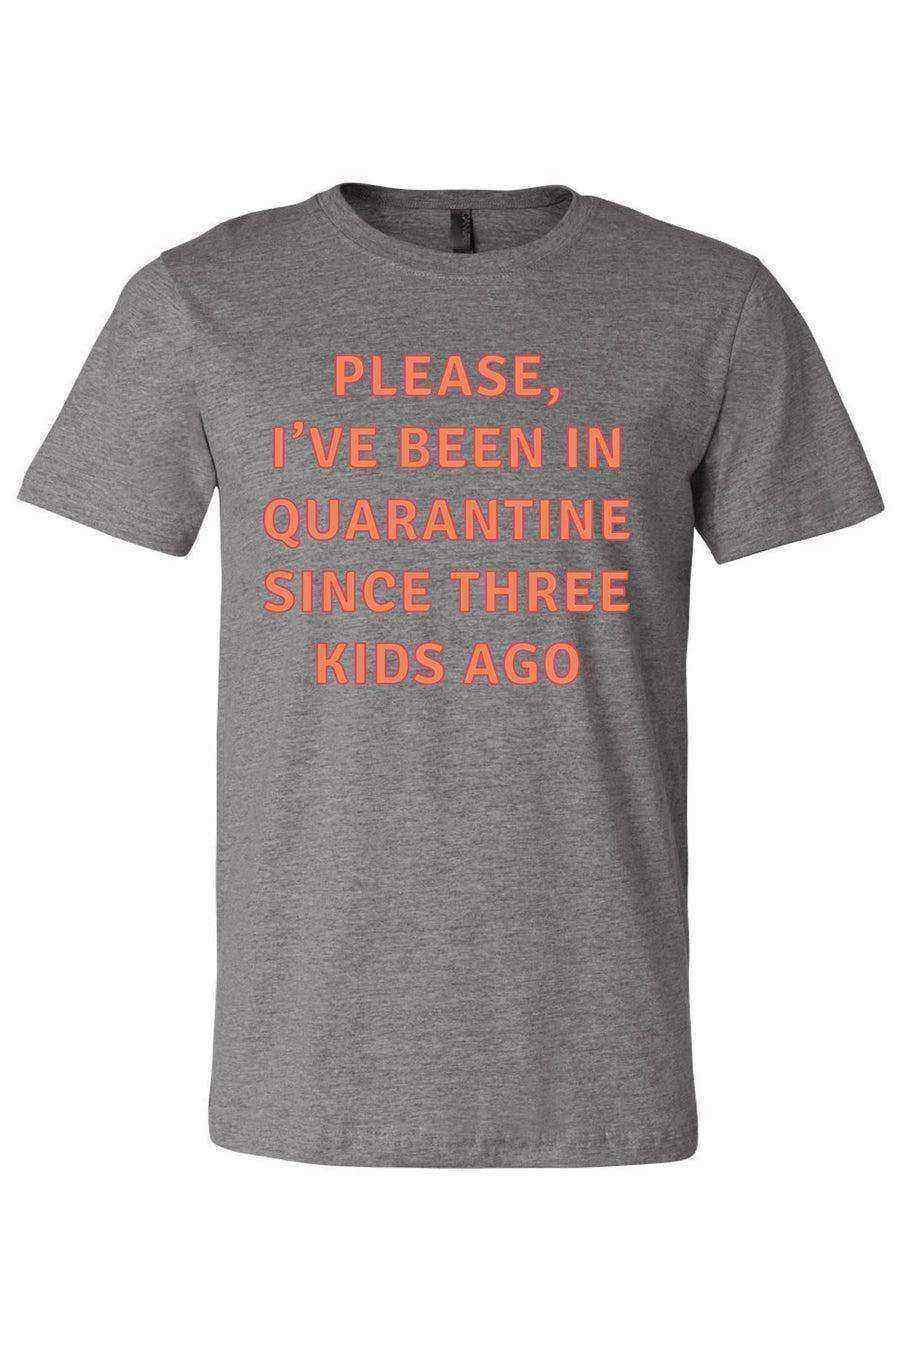 Moms During Quarantine Shirt | Stay At Home Mom Shirt - Dylan's Tees